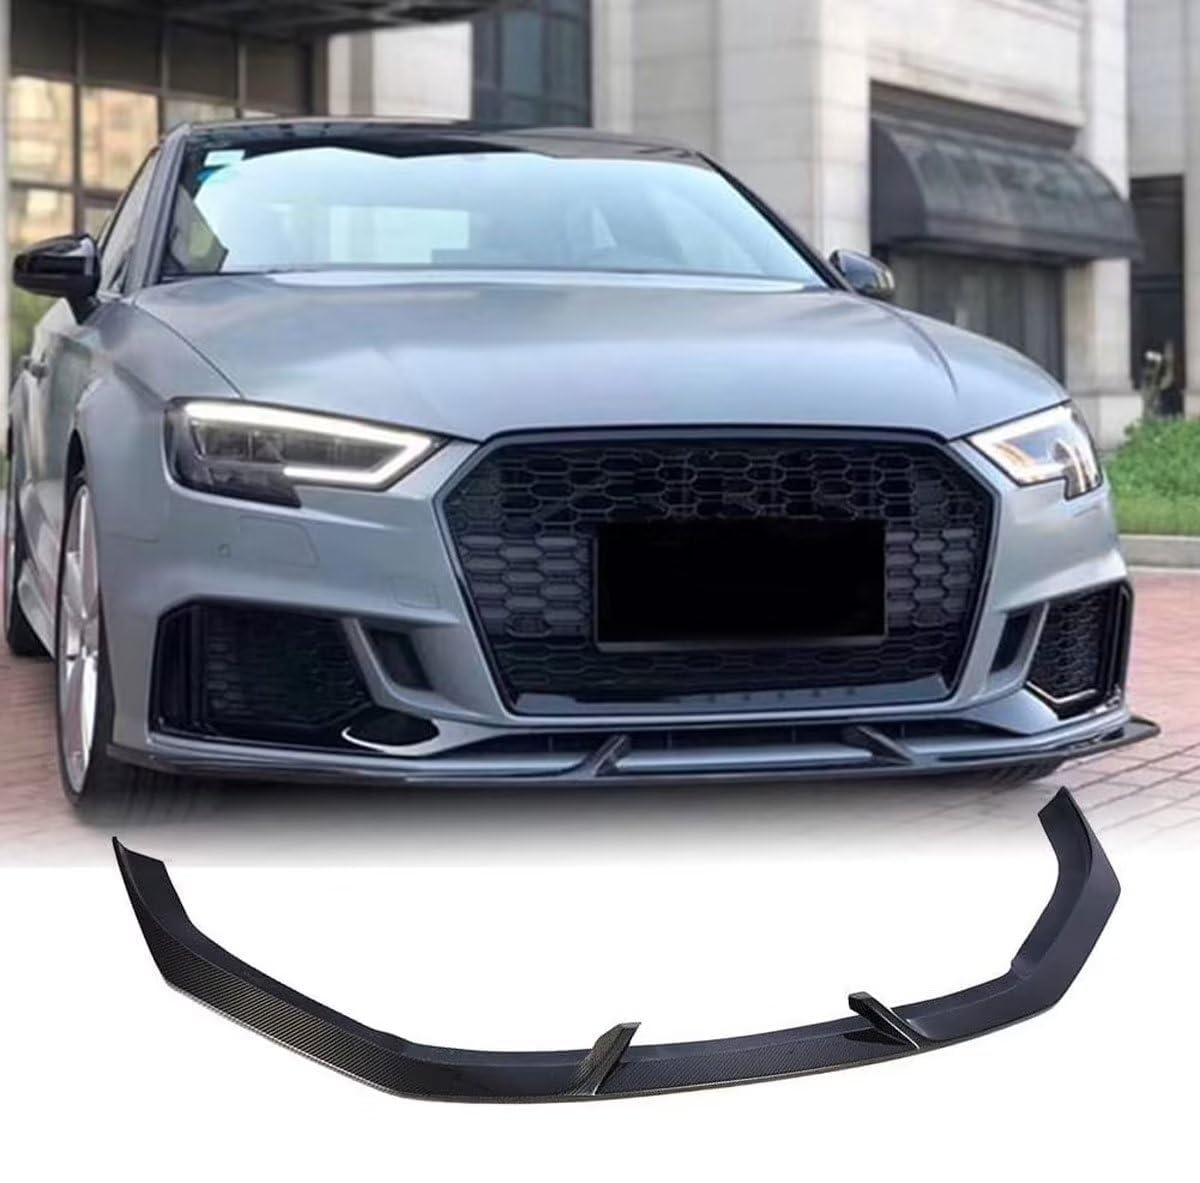 Für Audi RS3 Sedan 4-Door 2017 2018 2019 Auto Frontlippe Frontspoiler,Auto Frontschürze Lippenspoiler Karosserie Anbauteile von WRHOME